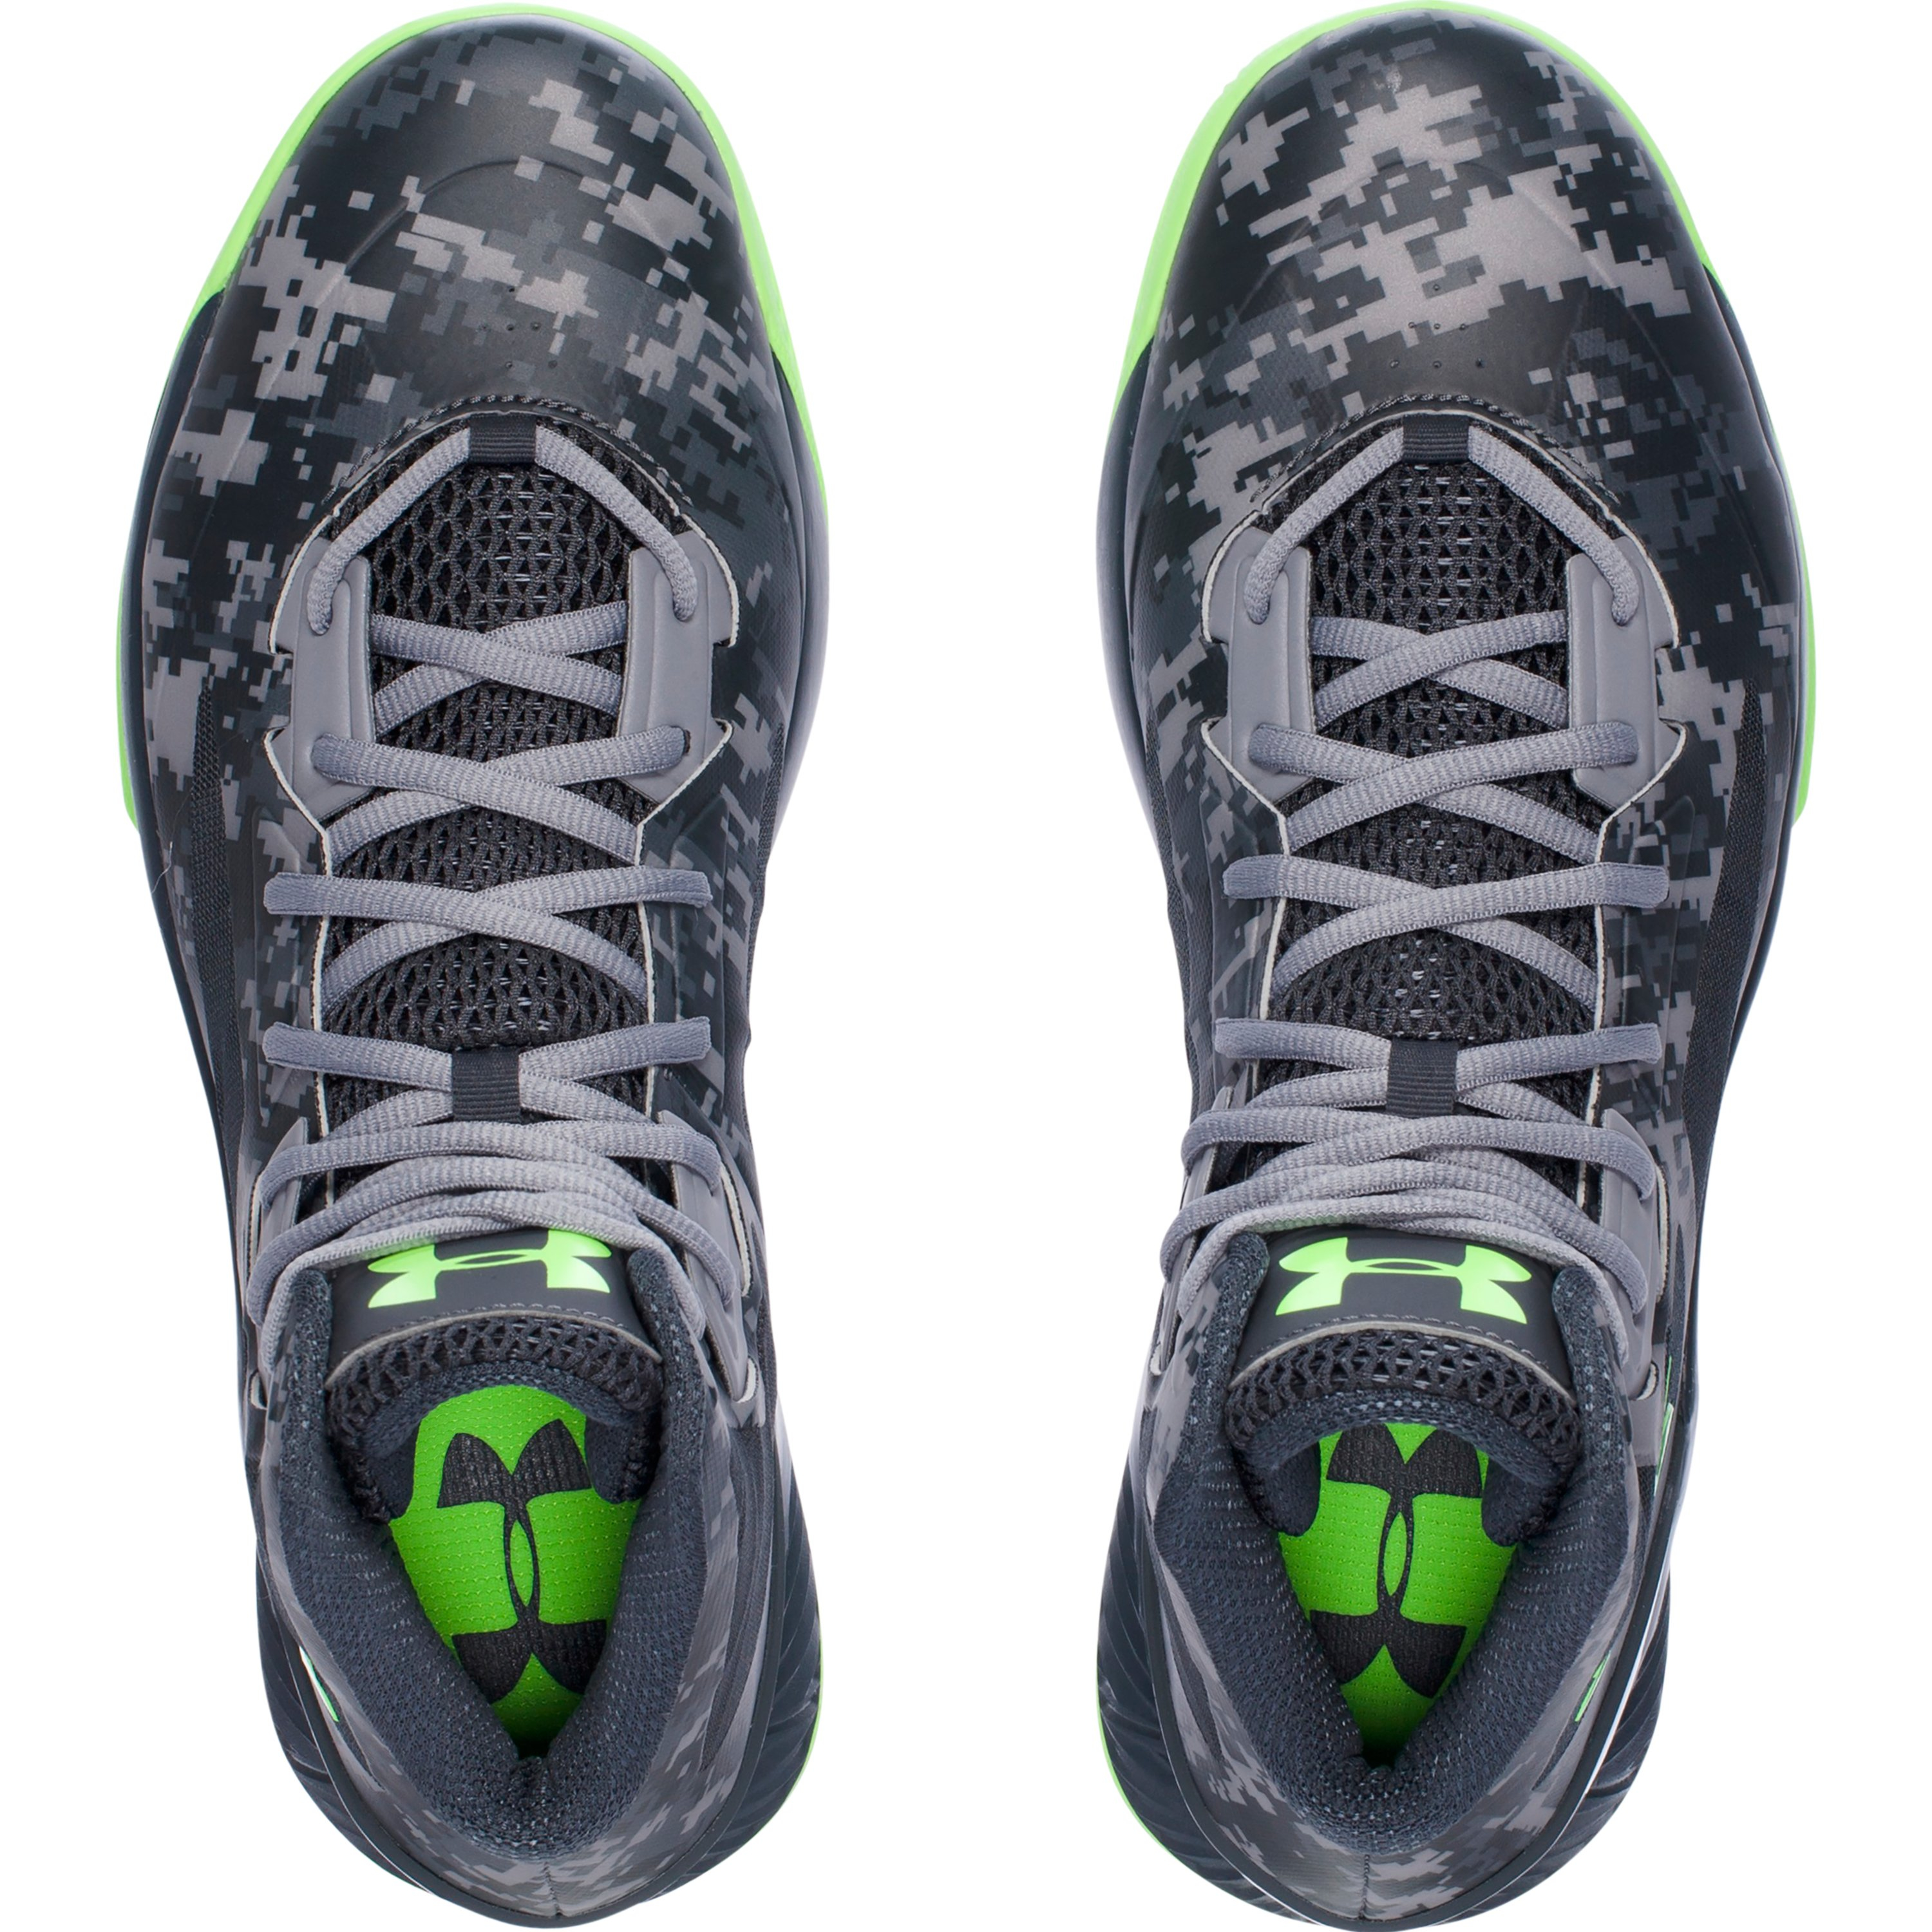 Under Armour Men's Ua Lightning 3 Basketball Shoes for Men | Lyst